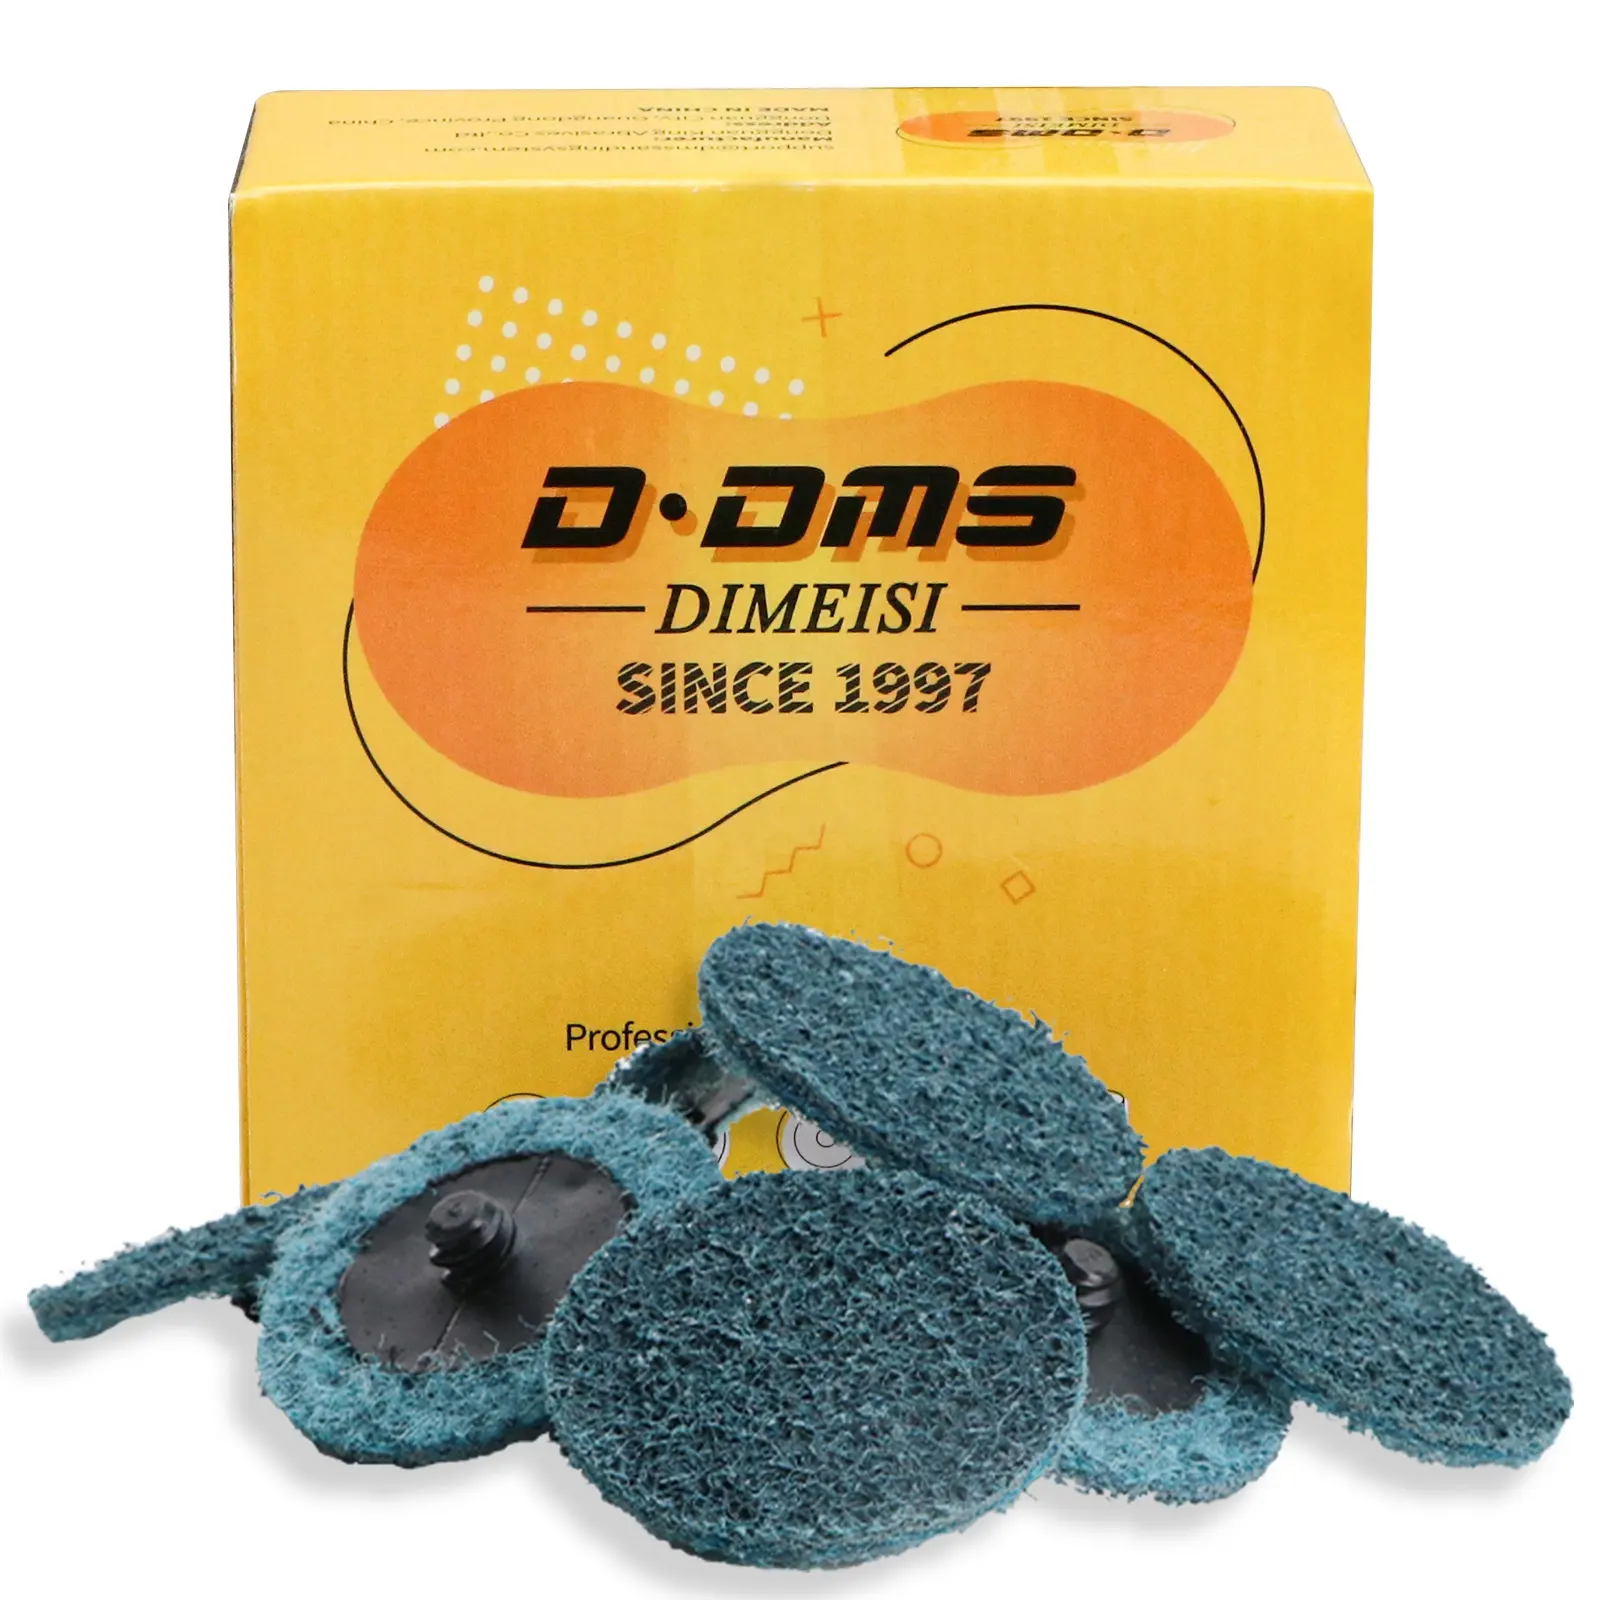 D DMS DIMEISI 0L29 동관 최고의 가격 R 형 백업 미세 모래 나일론 2 인치 샌딩 디스크